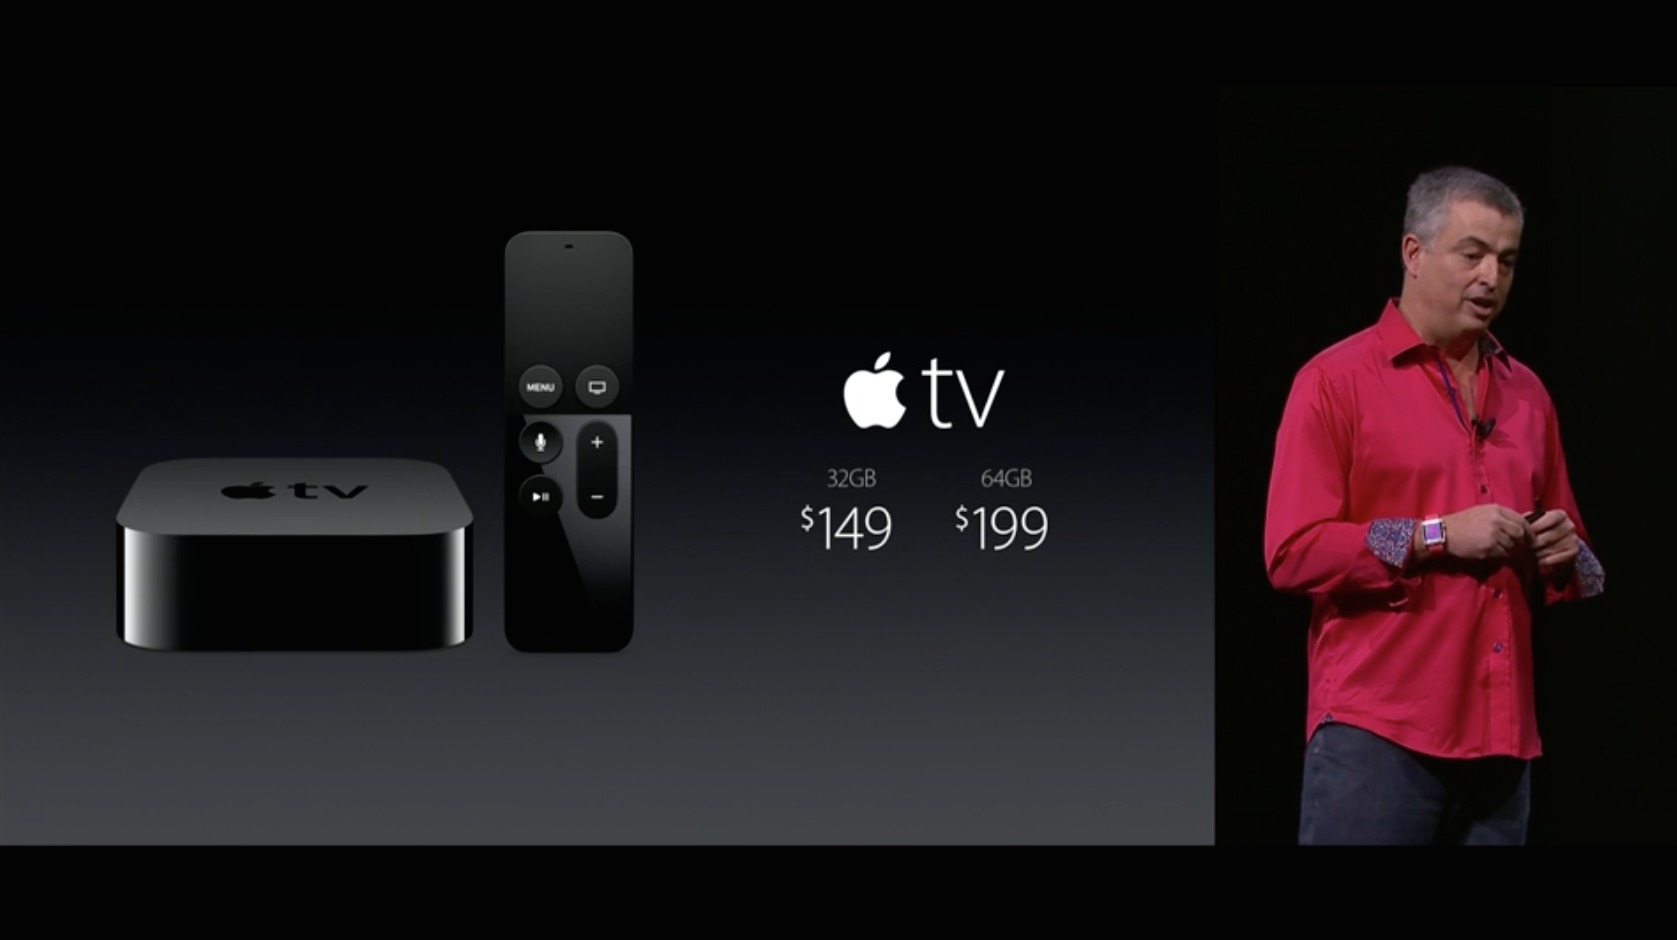 gys Traktat Kunstneriske The Fourth-Generation Apple TV Is Coming at Last - TidBITS